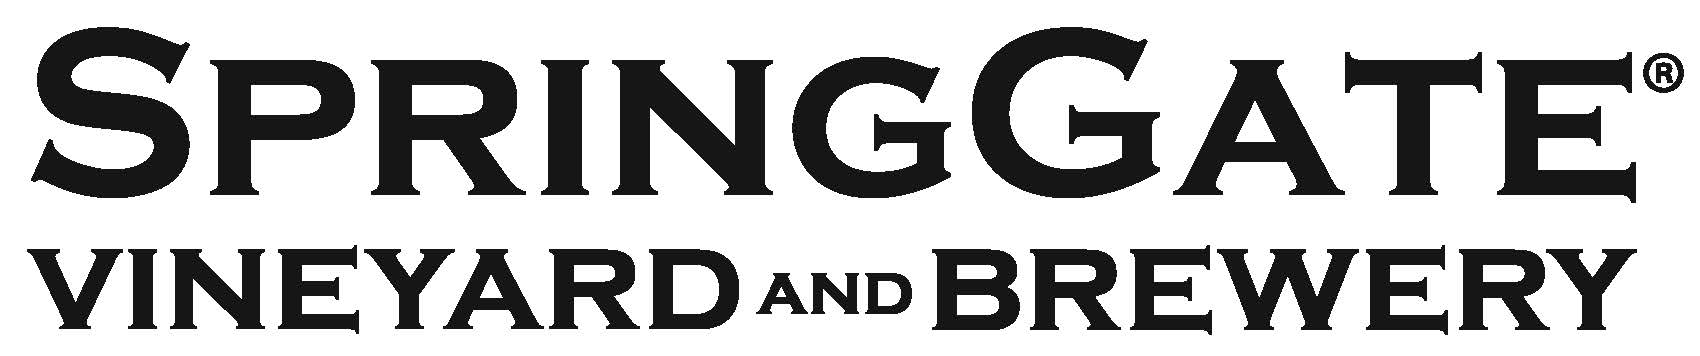 springgate-vineyard-and-brewery-logo